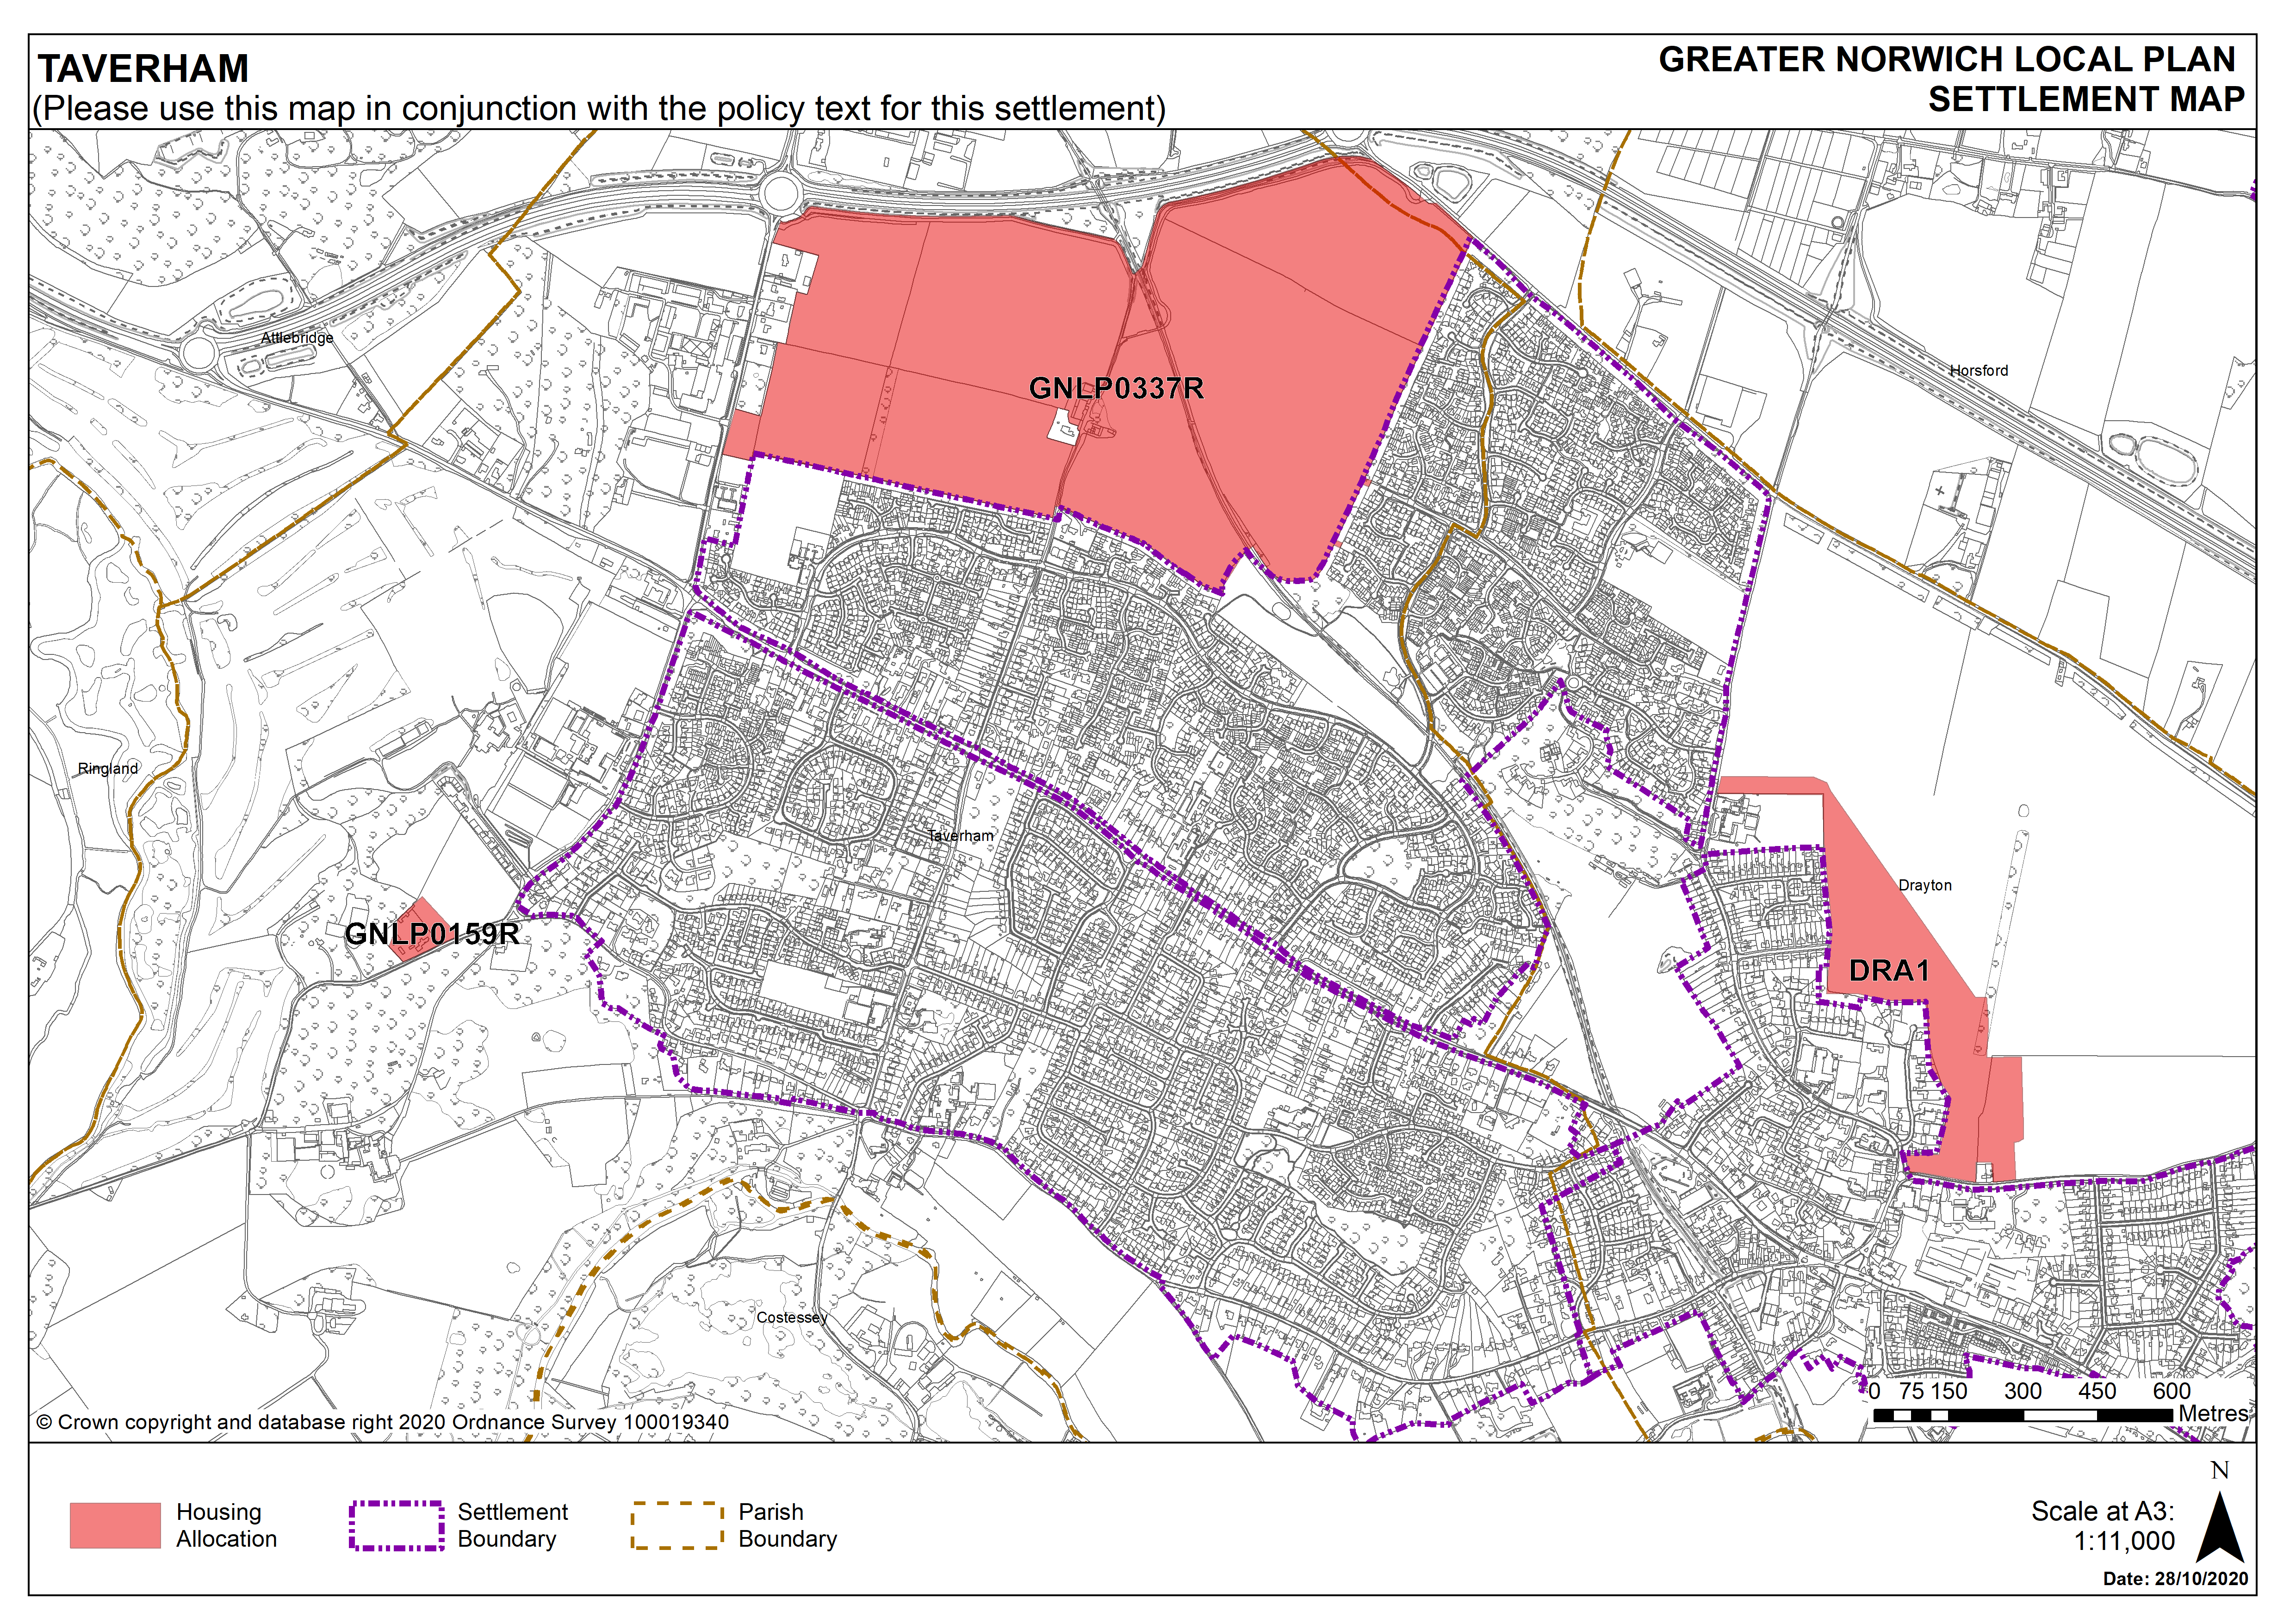 Taverham Settlement Map